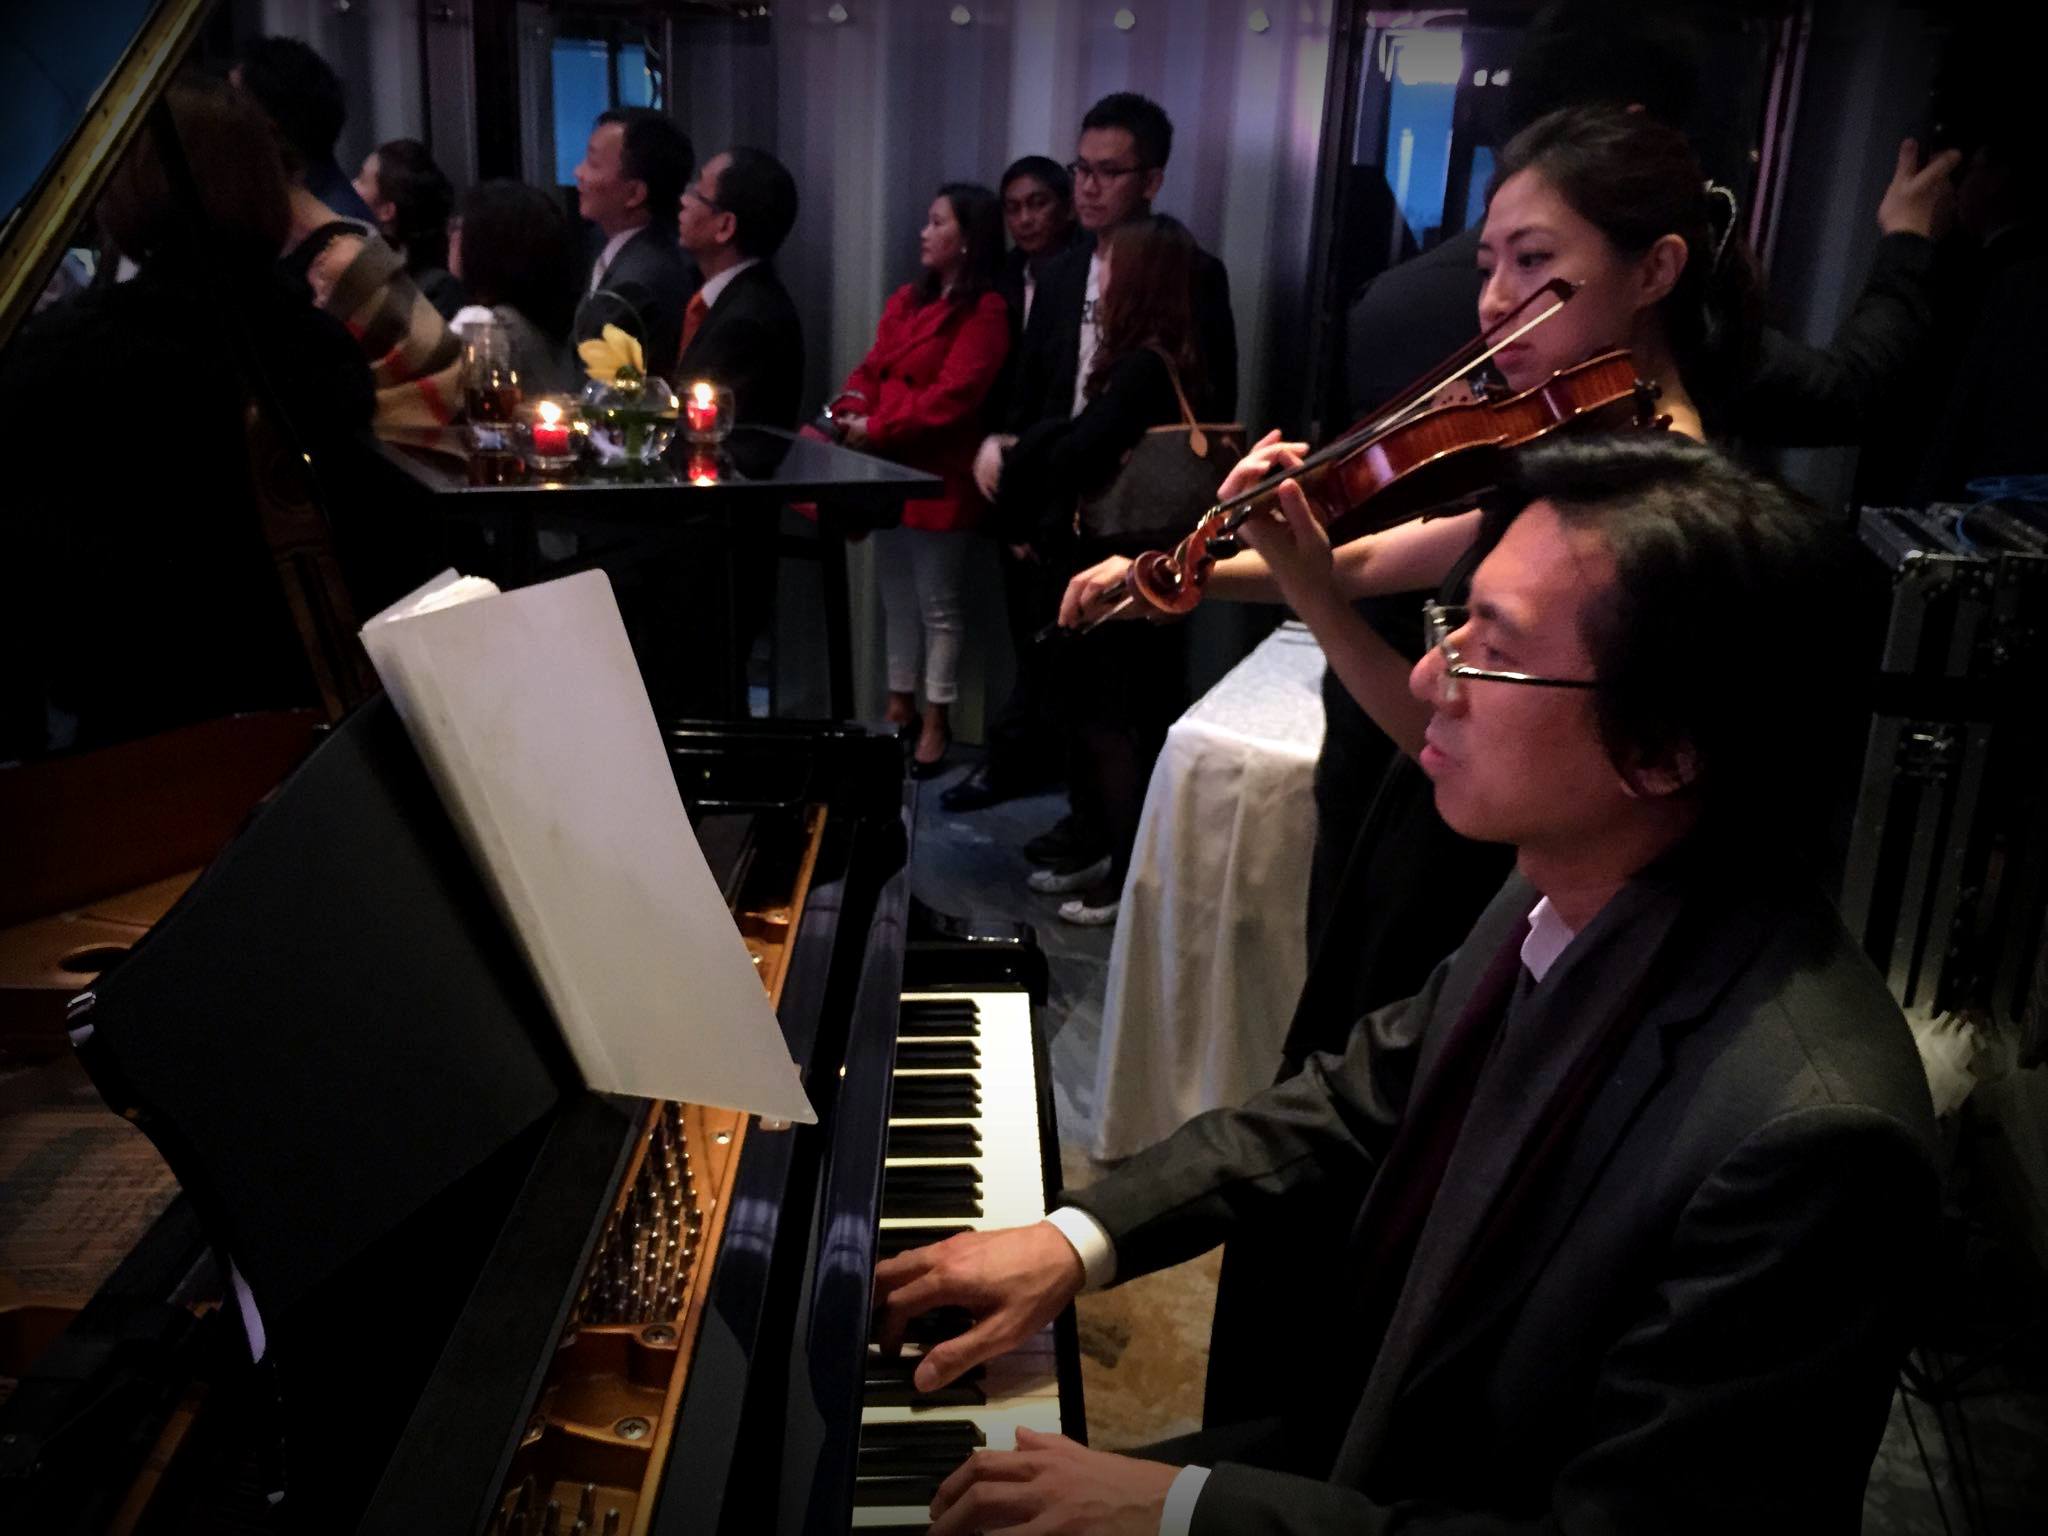 Unison Production Live Music band performance - Wedding in Ritz Carlton (Jan2016)